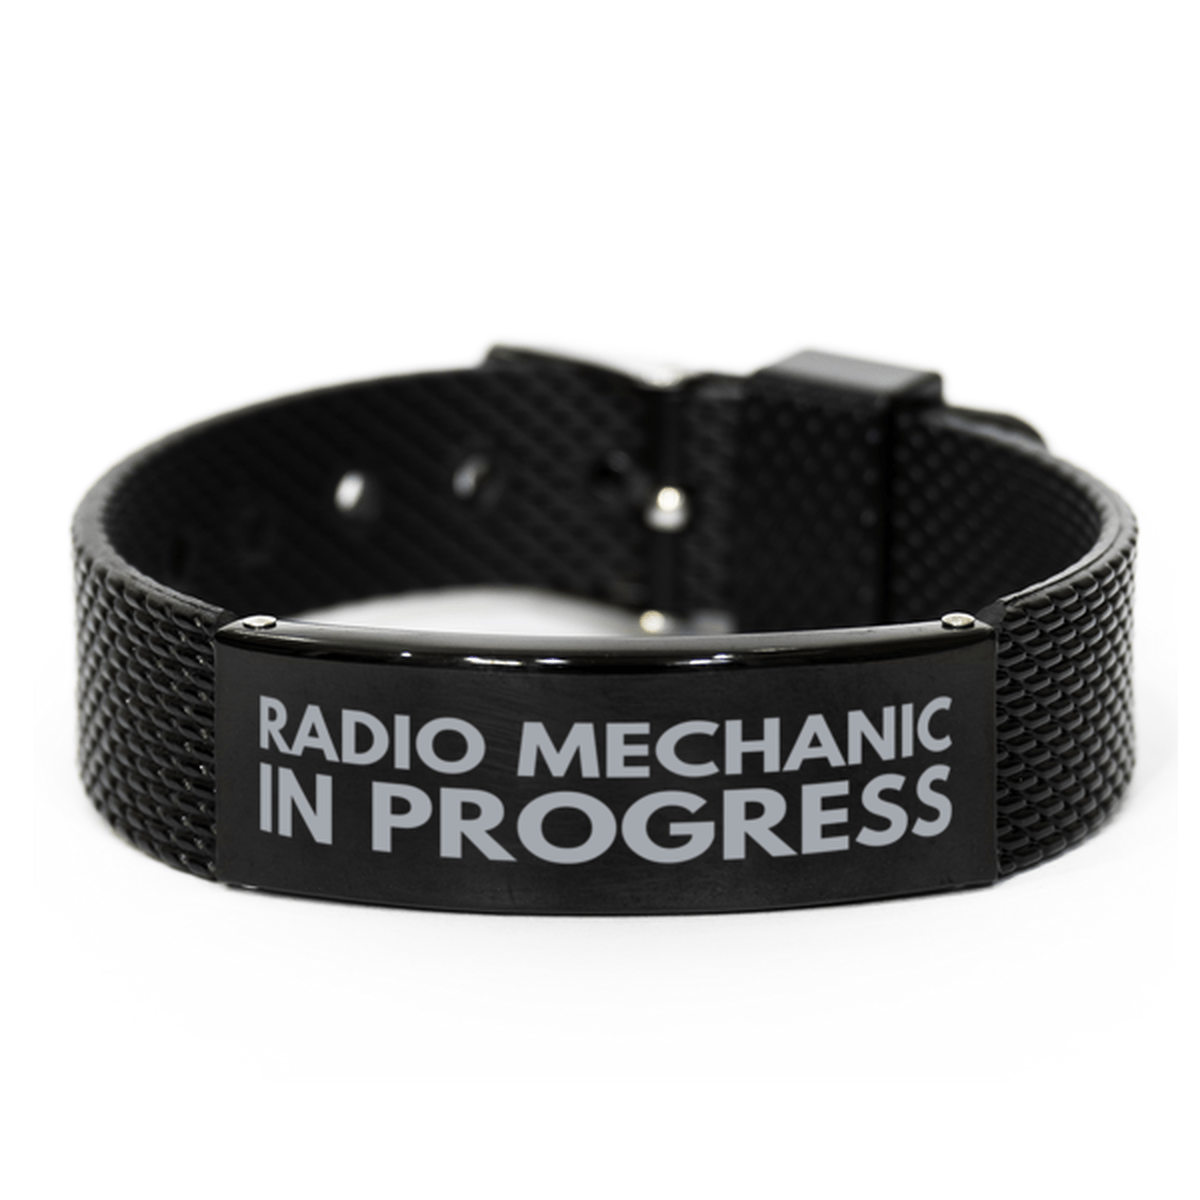 Inspirational Radio Mechanic Black Shark Mesh Bracelet, Radio Mechanic In Progress, Best Graduation Gifts for Students